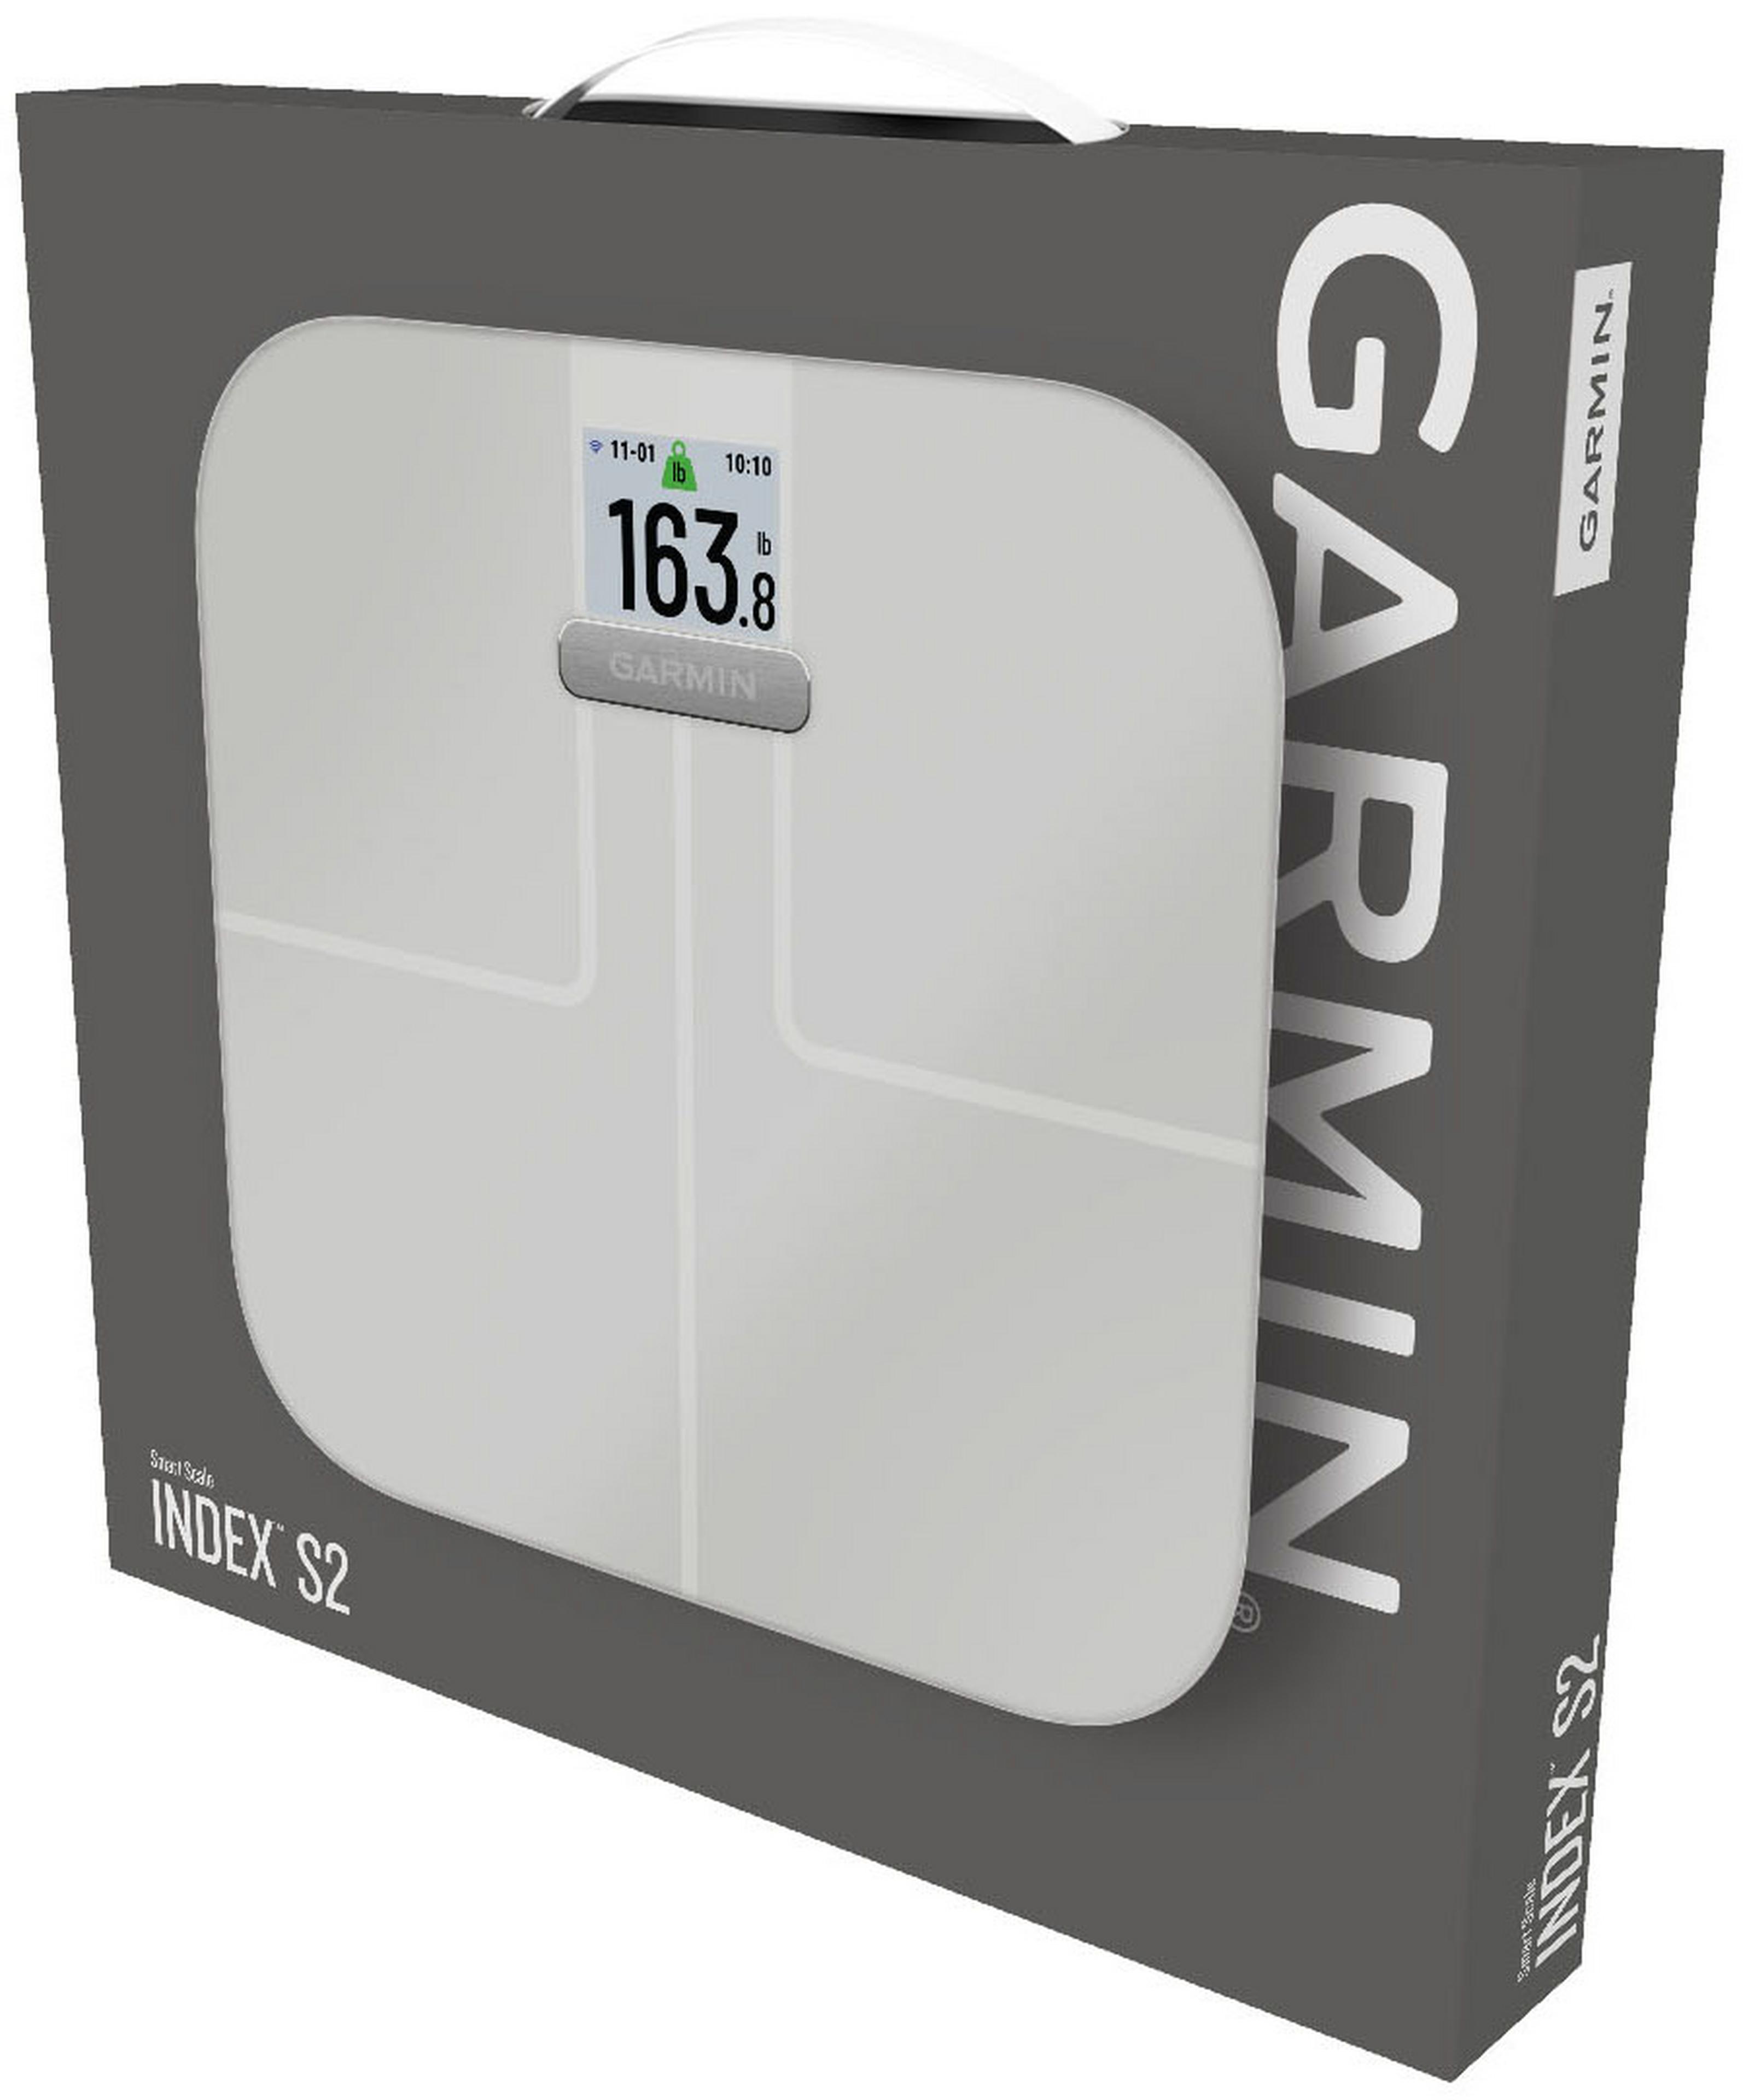  Garmin Index S2, Smart Scale with Wireless